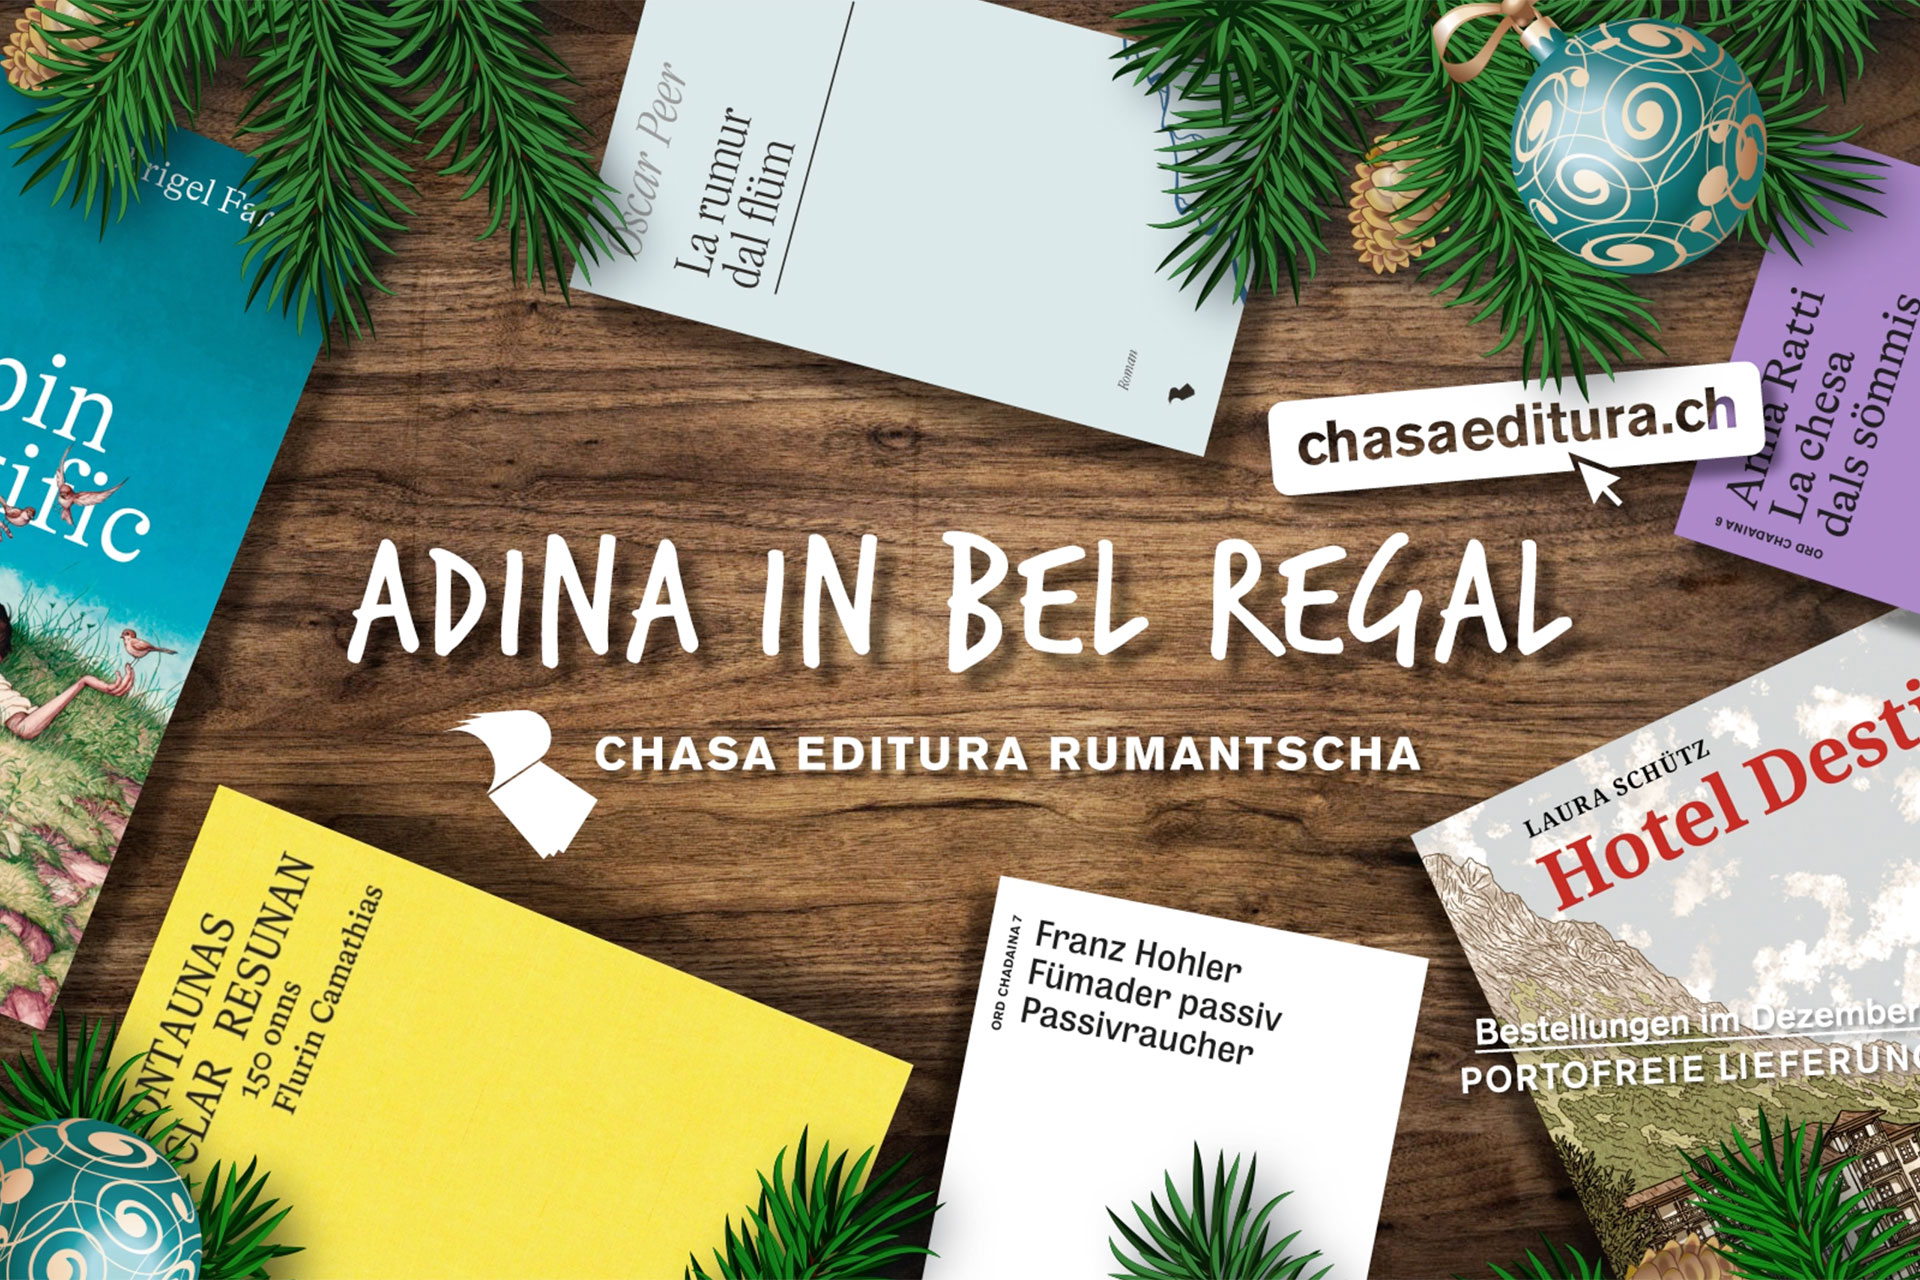 Chasa Editura Rumantscha